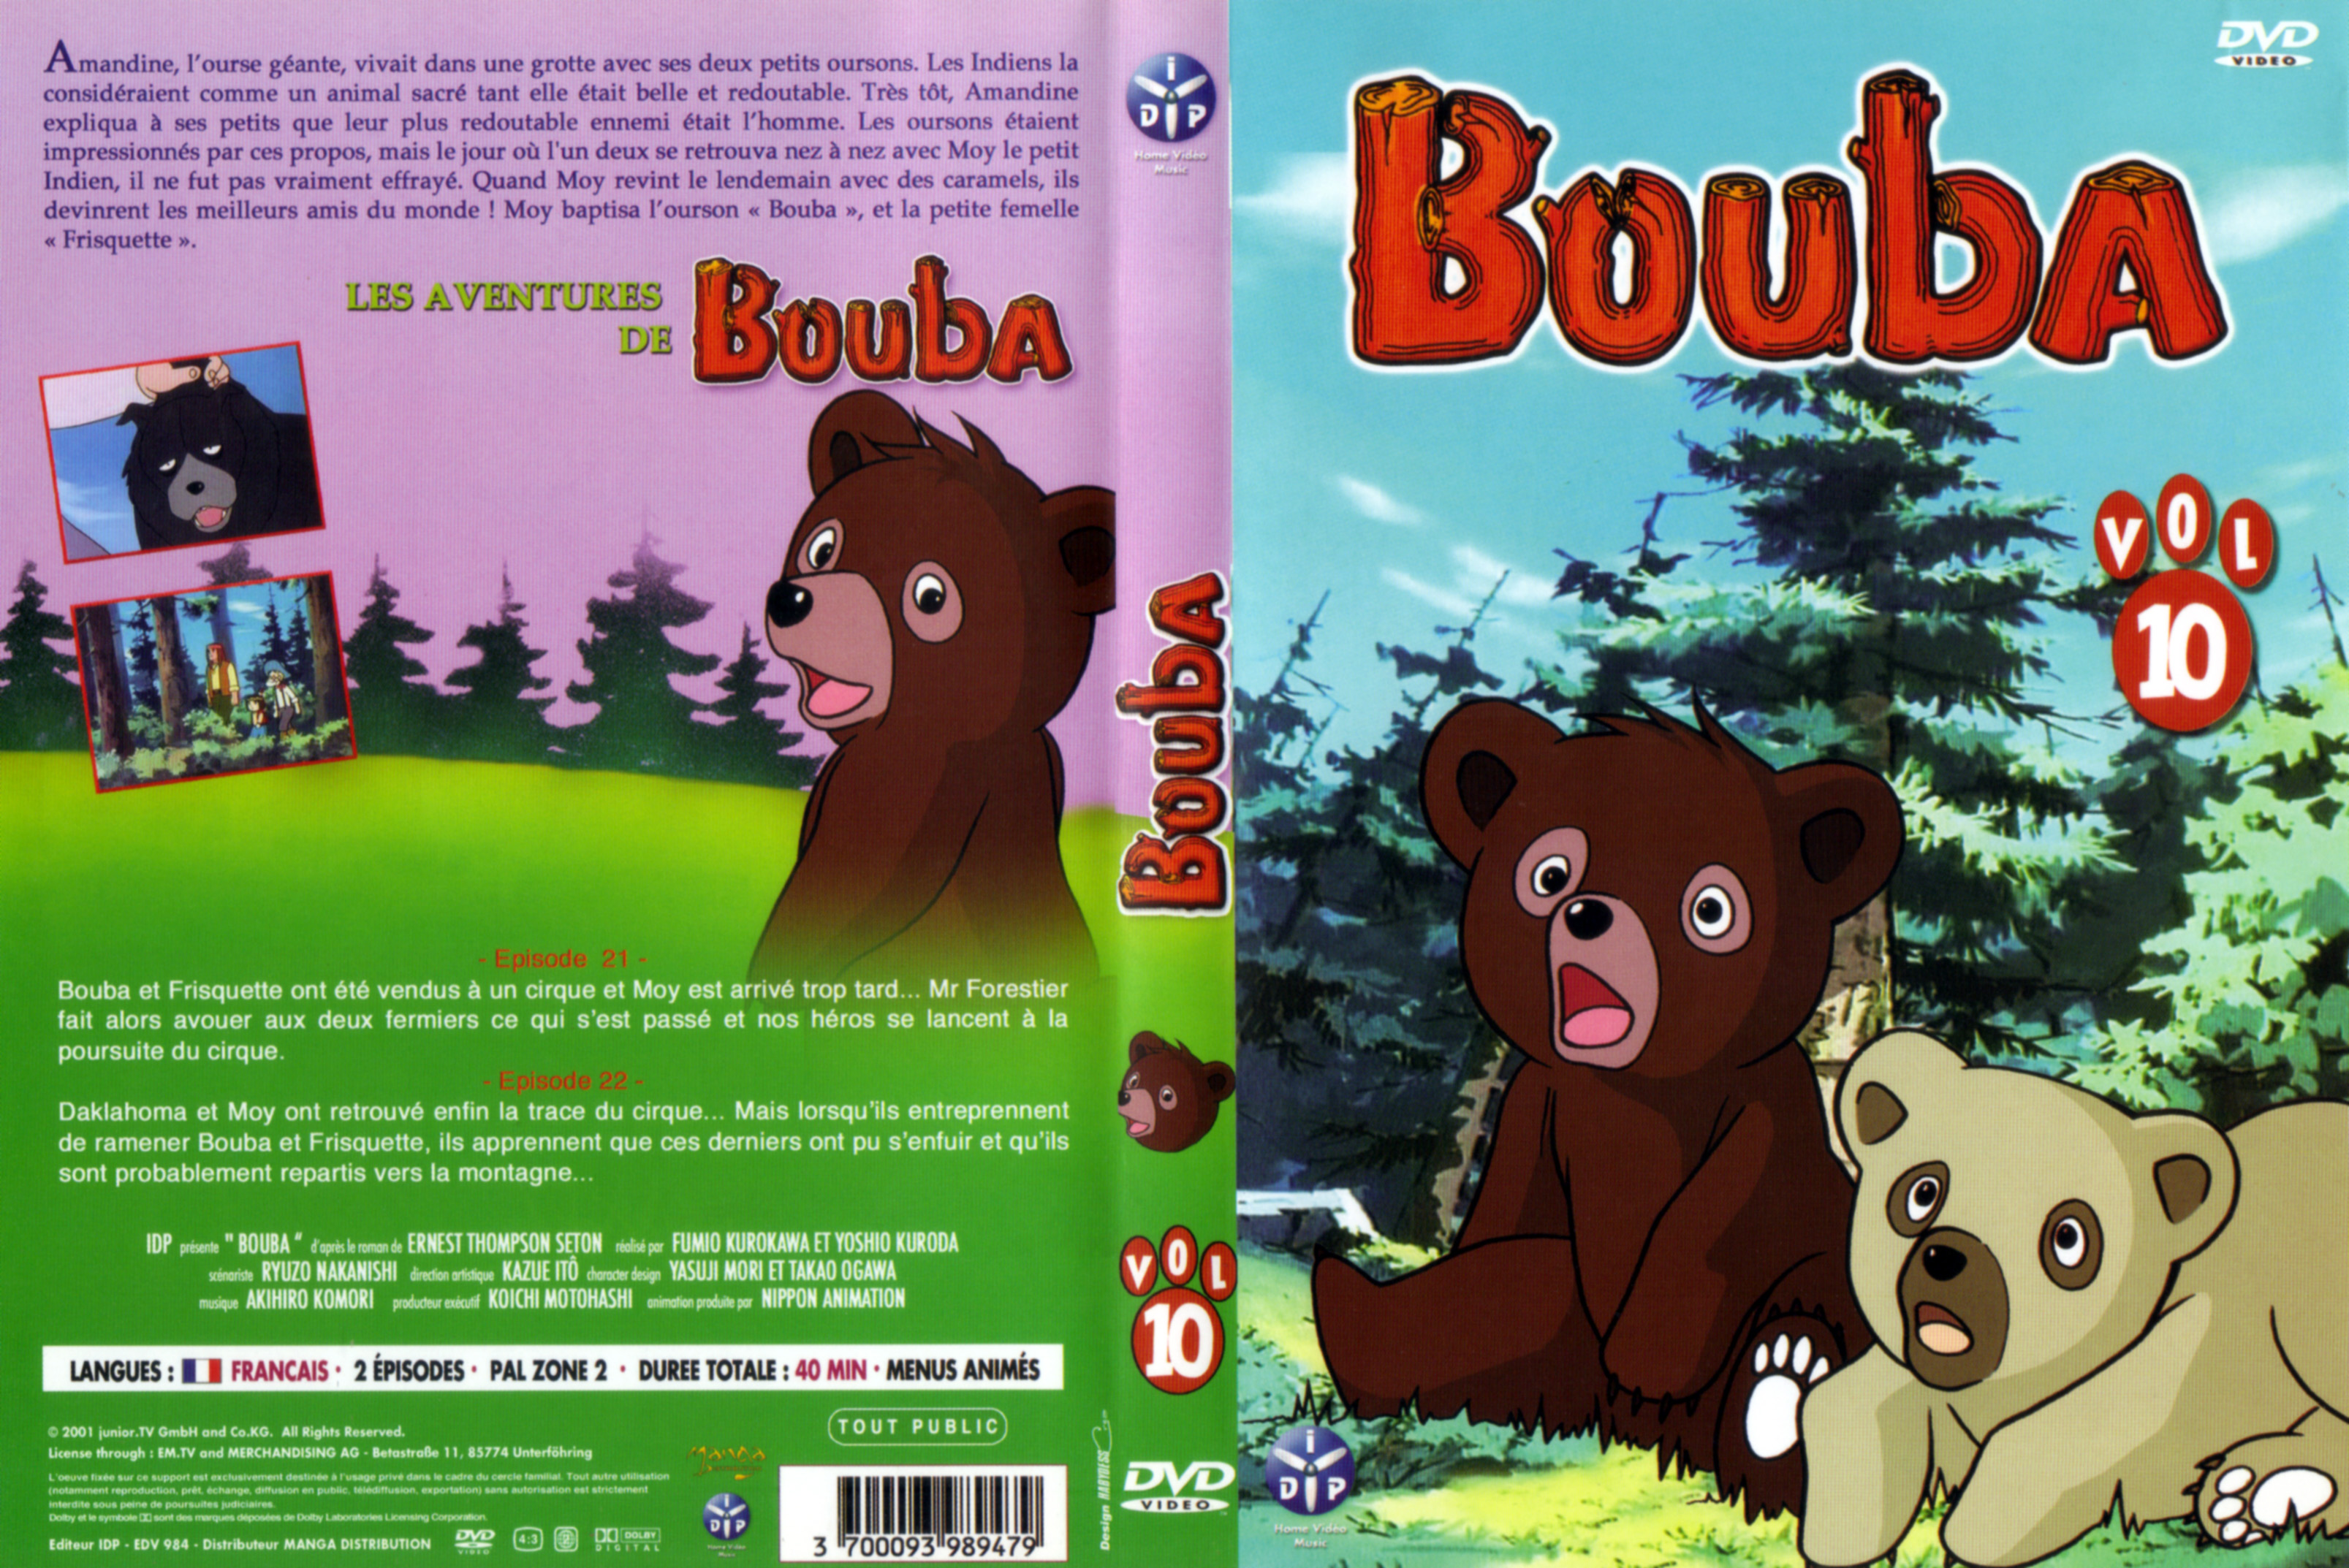 Jaquette DVD Bouba vol 10